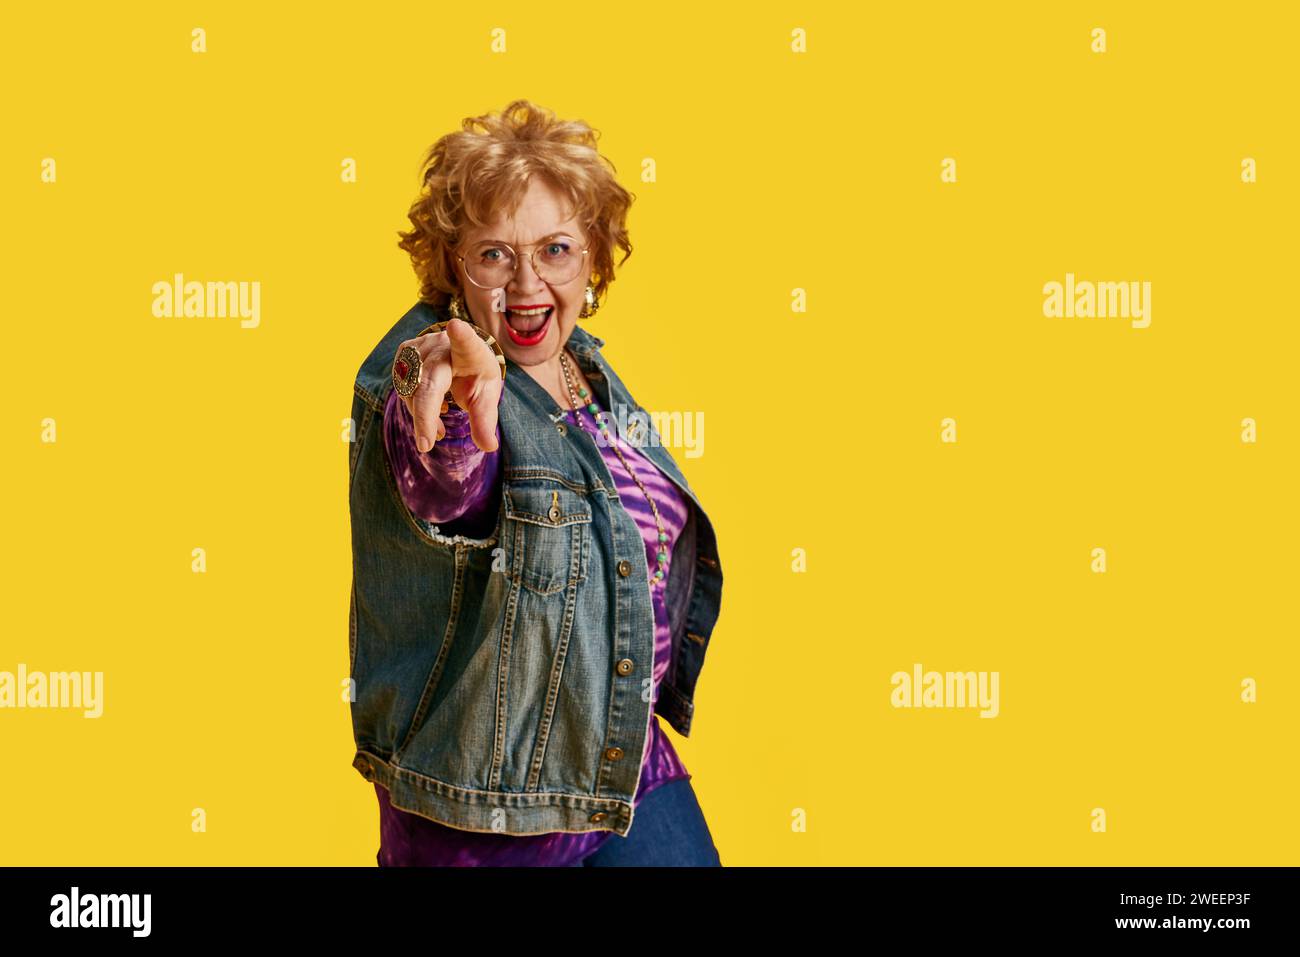 Joyful senior woman pointing at camera dressed in denim jacket, purple blouse against yellow background. Stock Photo